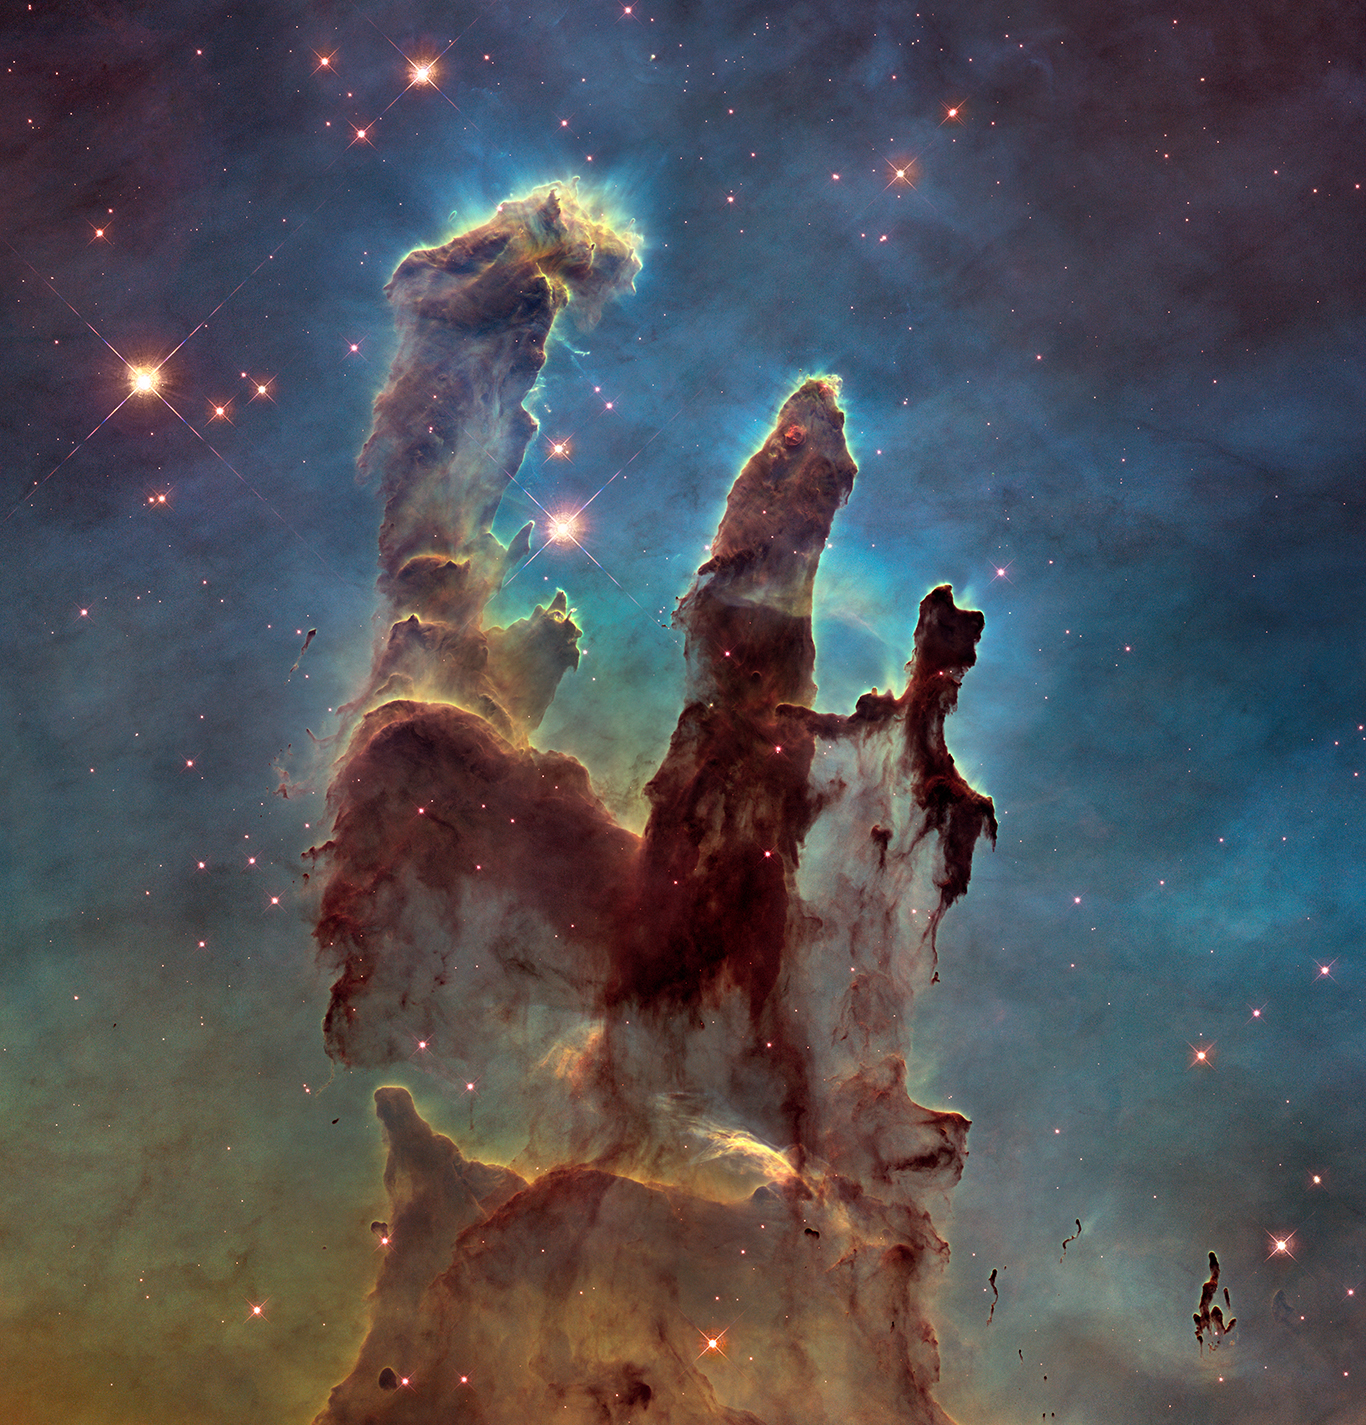 Credit: NASA, ESA, and the Hubble Heritage Team (STScI/AURA)